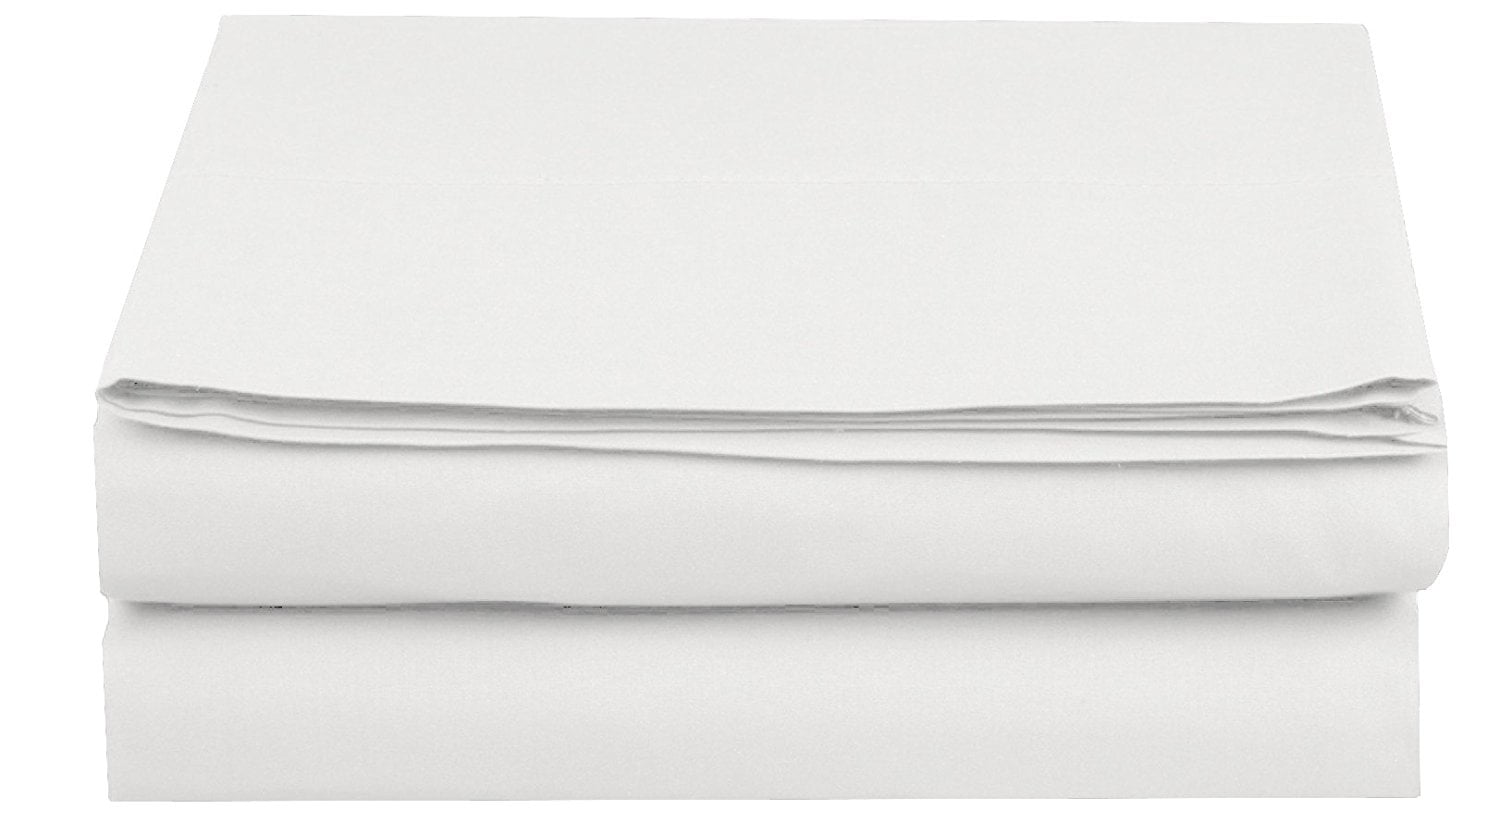 1 new 66x115 bright white twin xl flat sheet platinum label hotel grade t130 